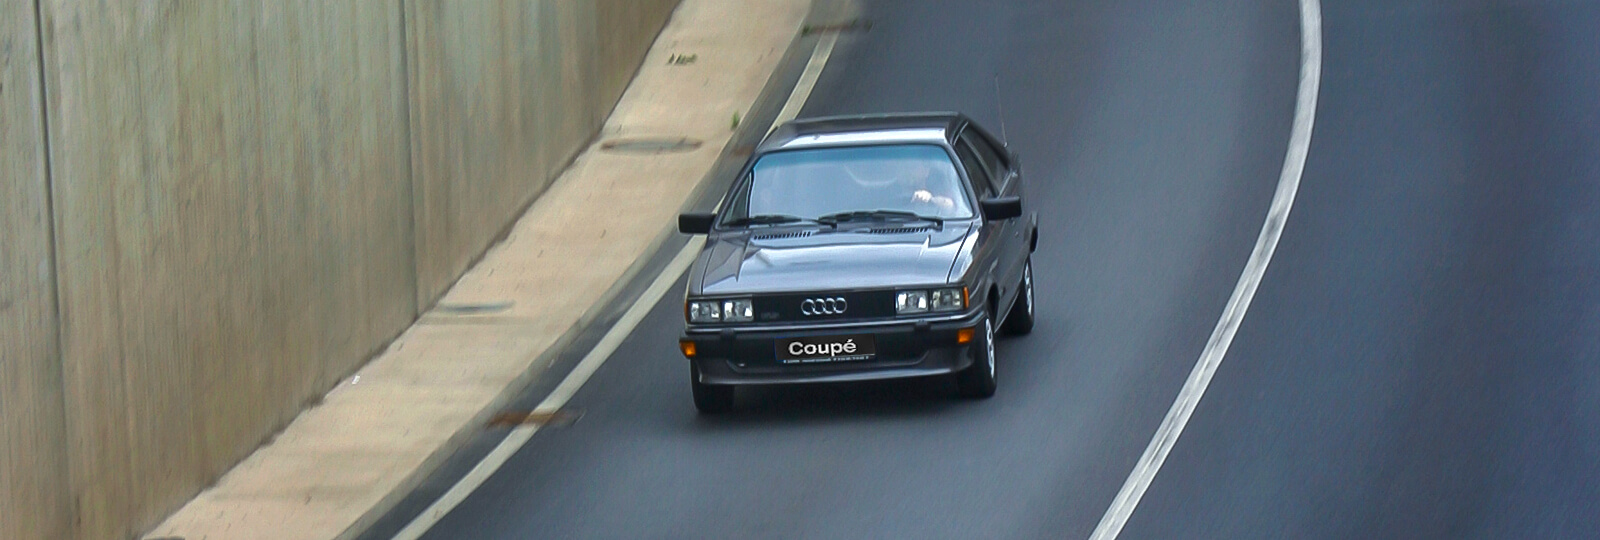 Audi Coupé GT5S Typ 81